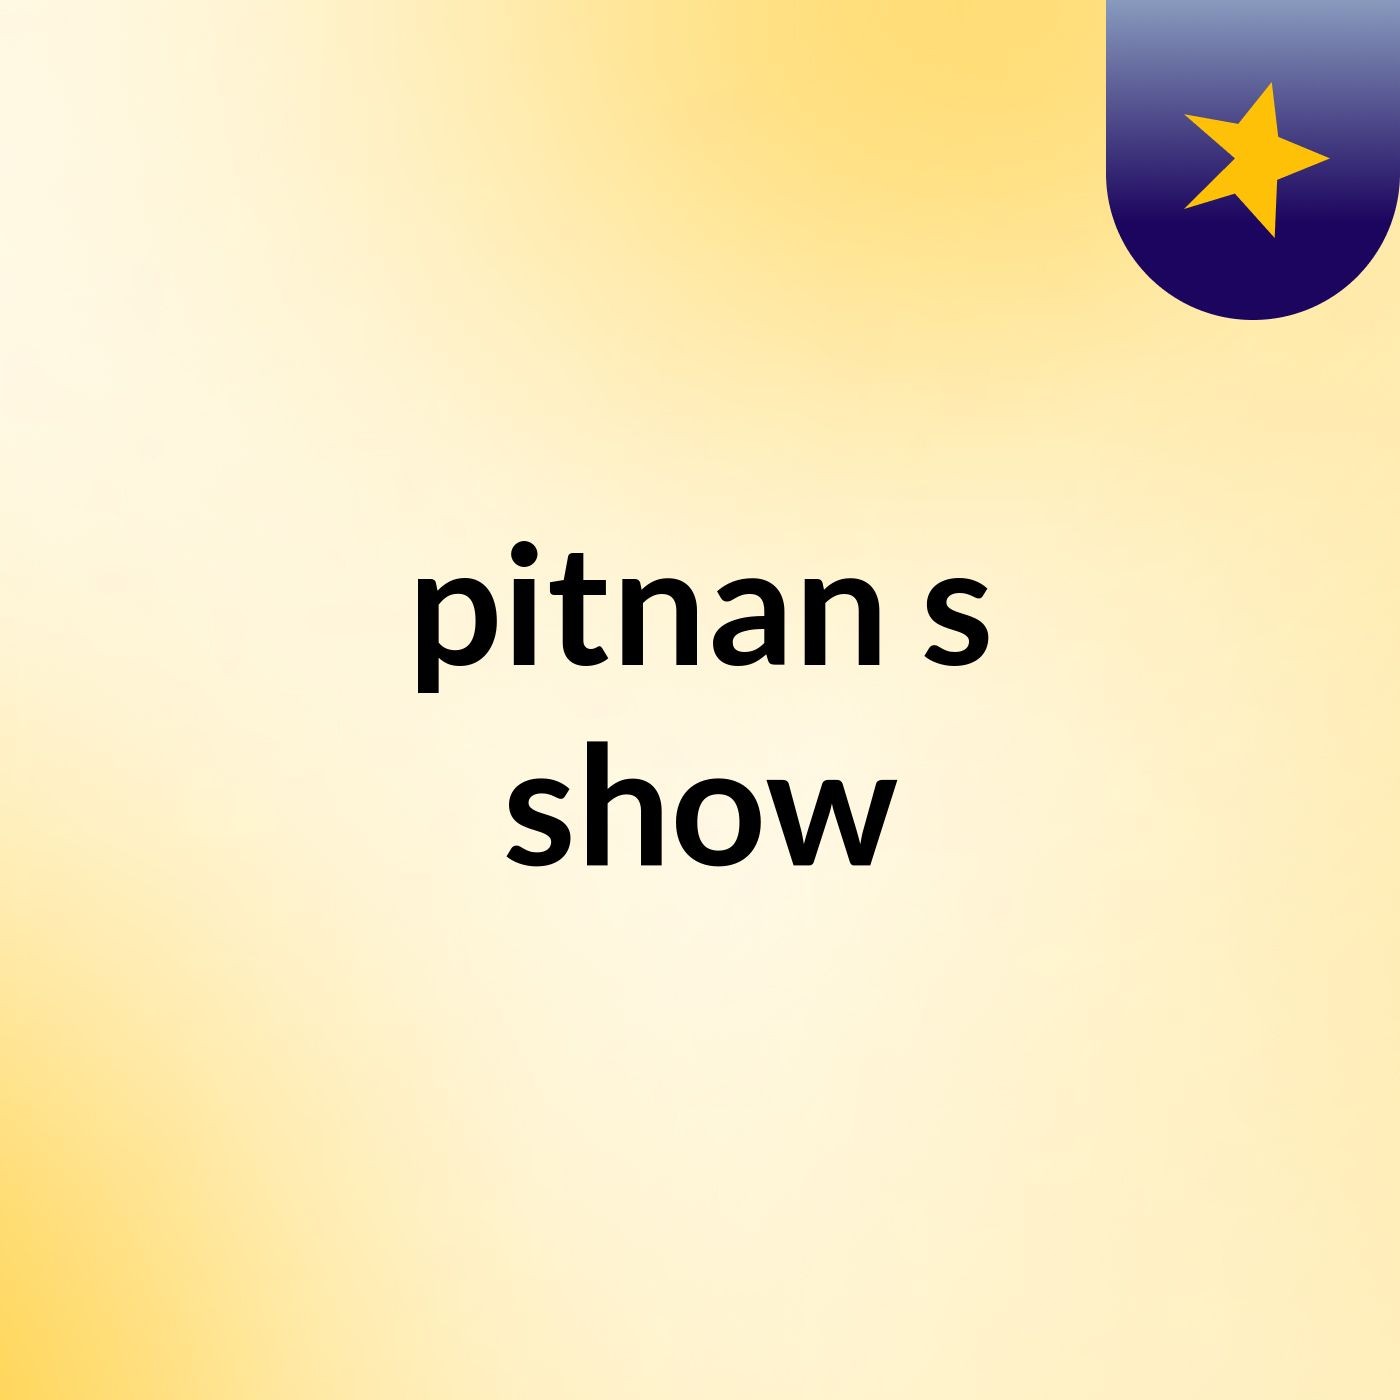 pitnan's show